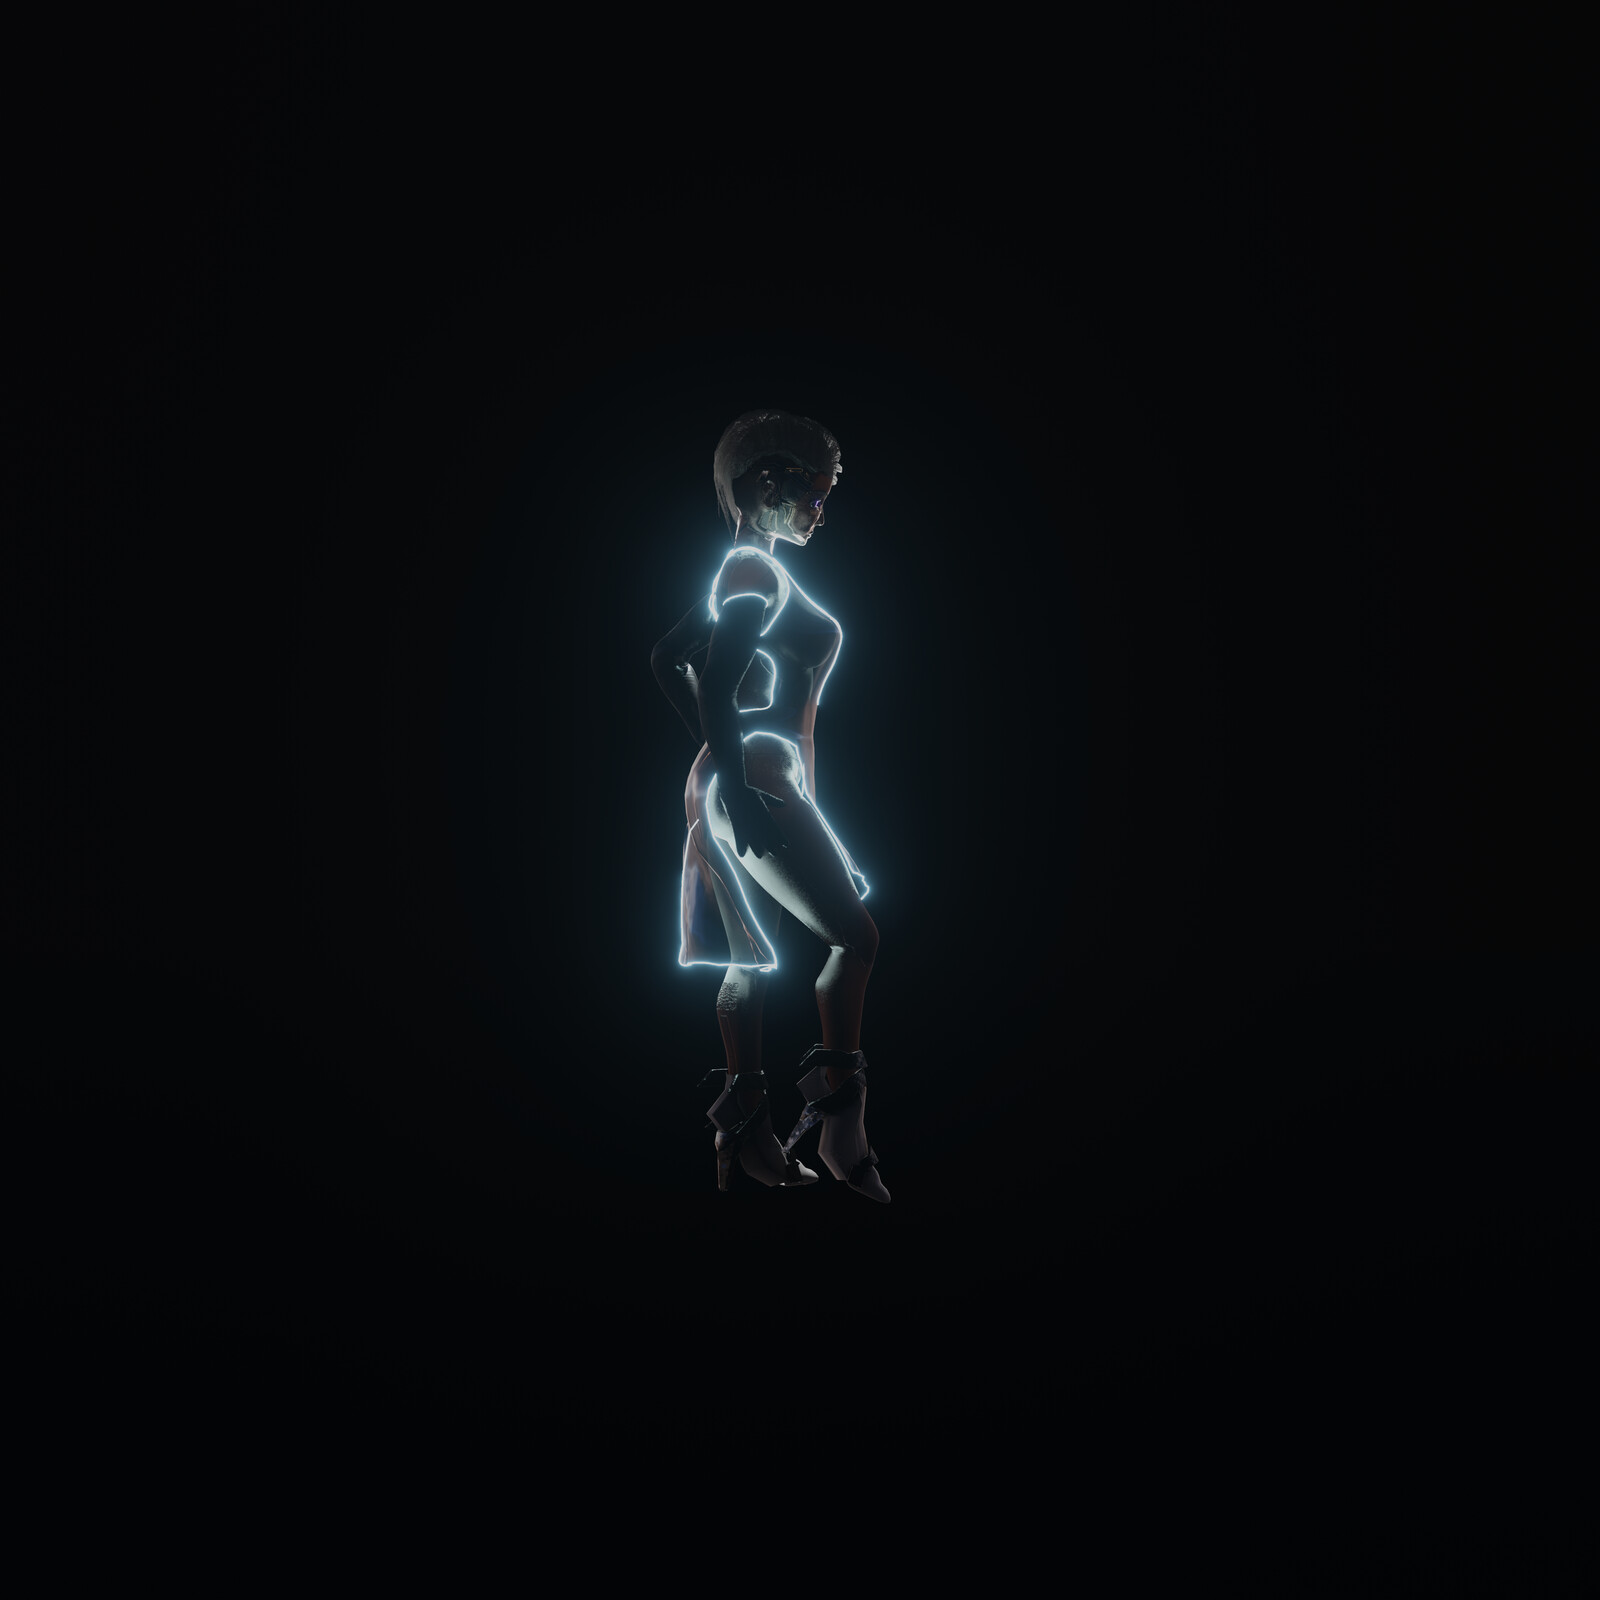 Neon dress test renders